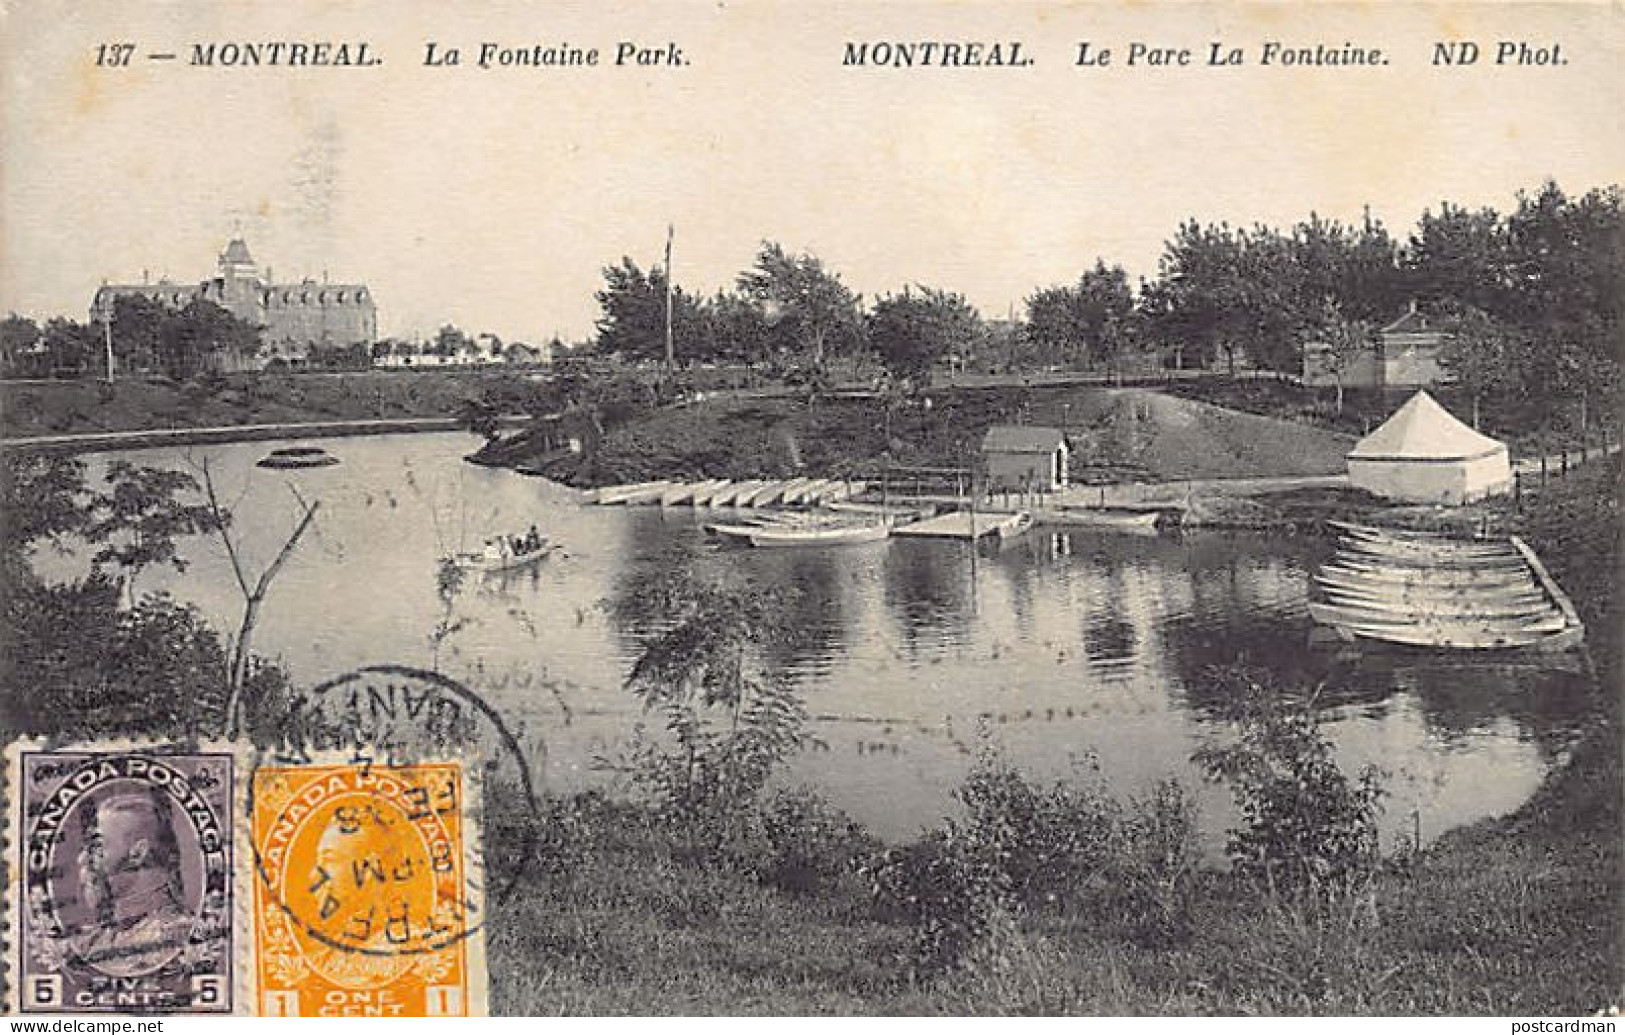 Canada - MONTREAL (QC) Le Parc La Fontaine - Ed. Neurdein ND Phot. 137 - Montreal